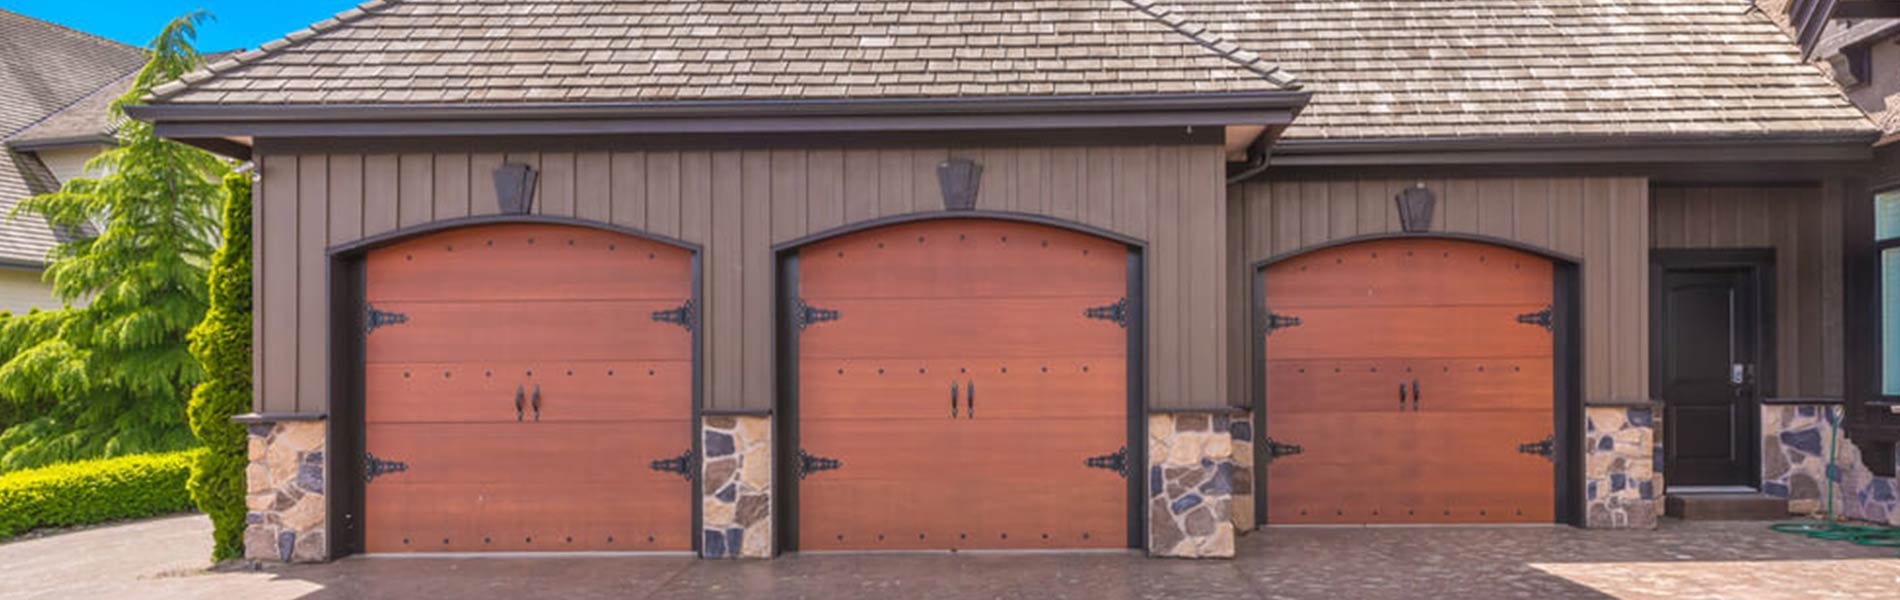 Garage Door Maintenance, Milwaukee, WI